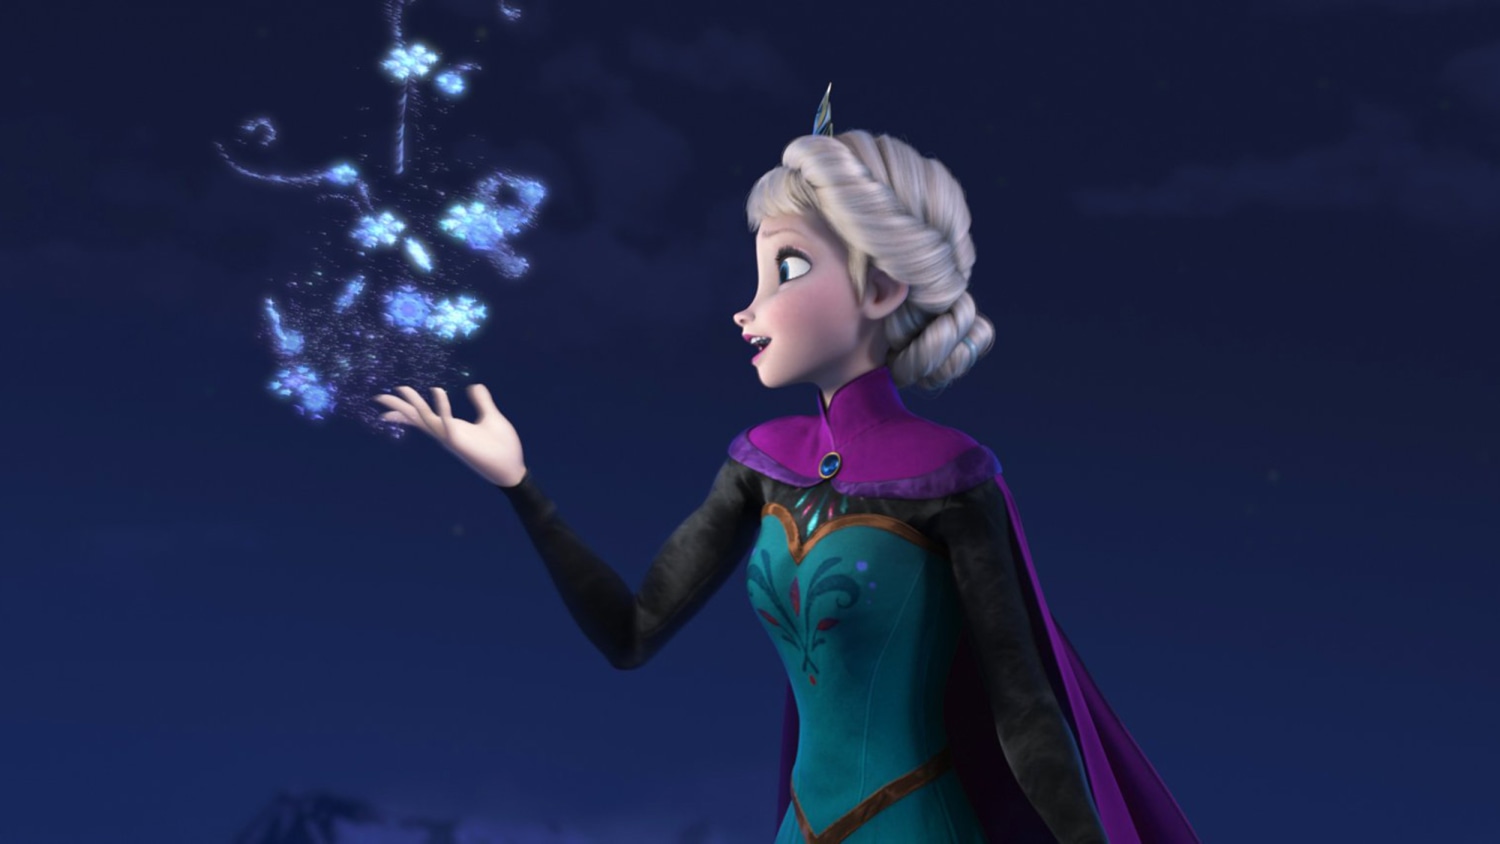 ik klaag Bijdrage ik ben trots Backlash Grows Over Campaign to Make Elsa From 'Frozen' a Lesbian